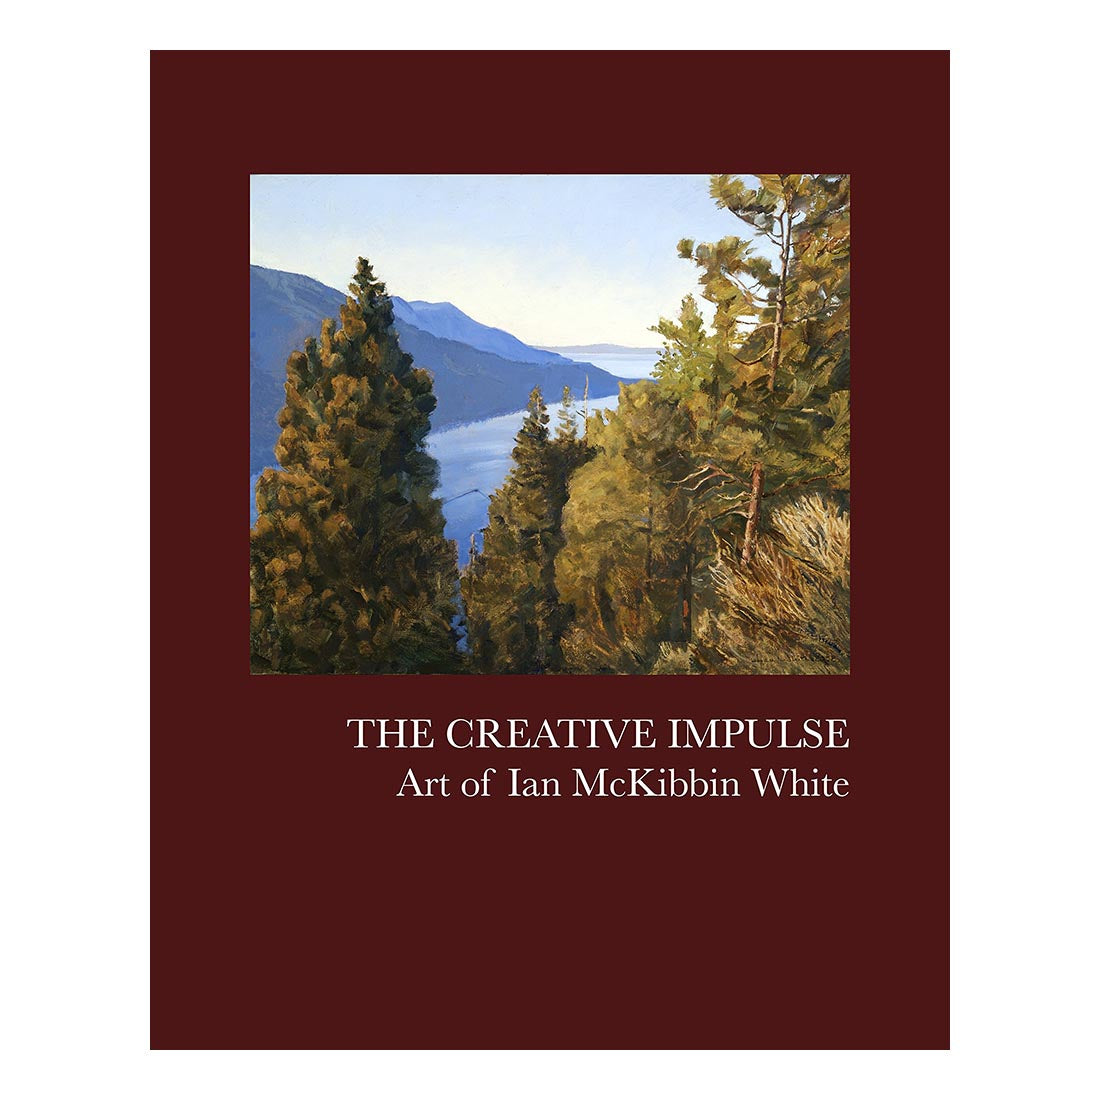 The Creative Impulse: Art of Ian McKibbin White